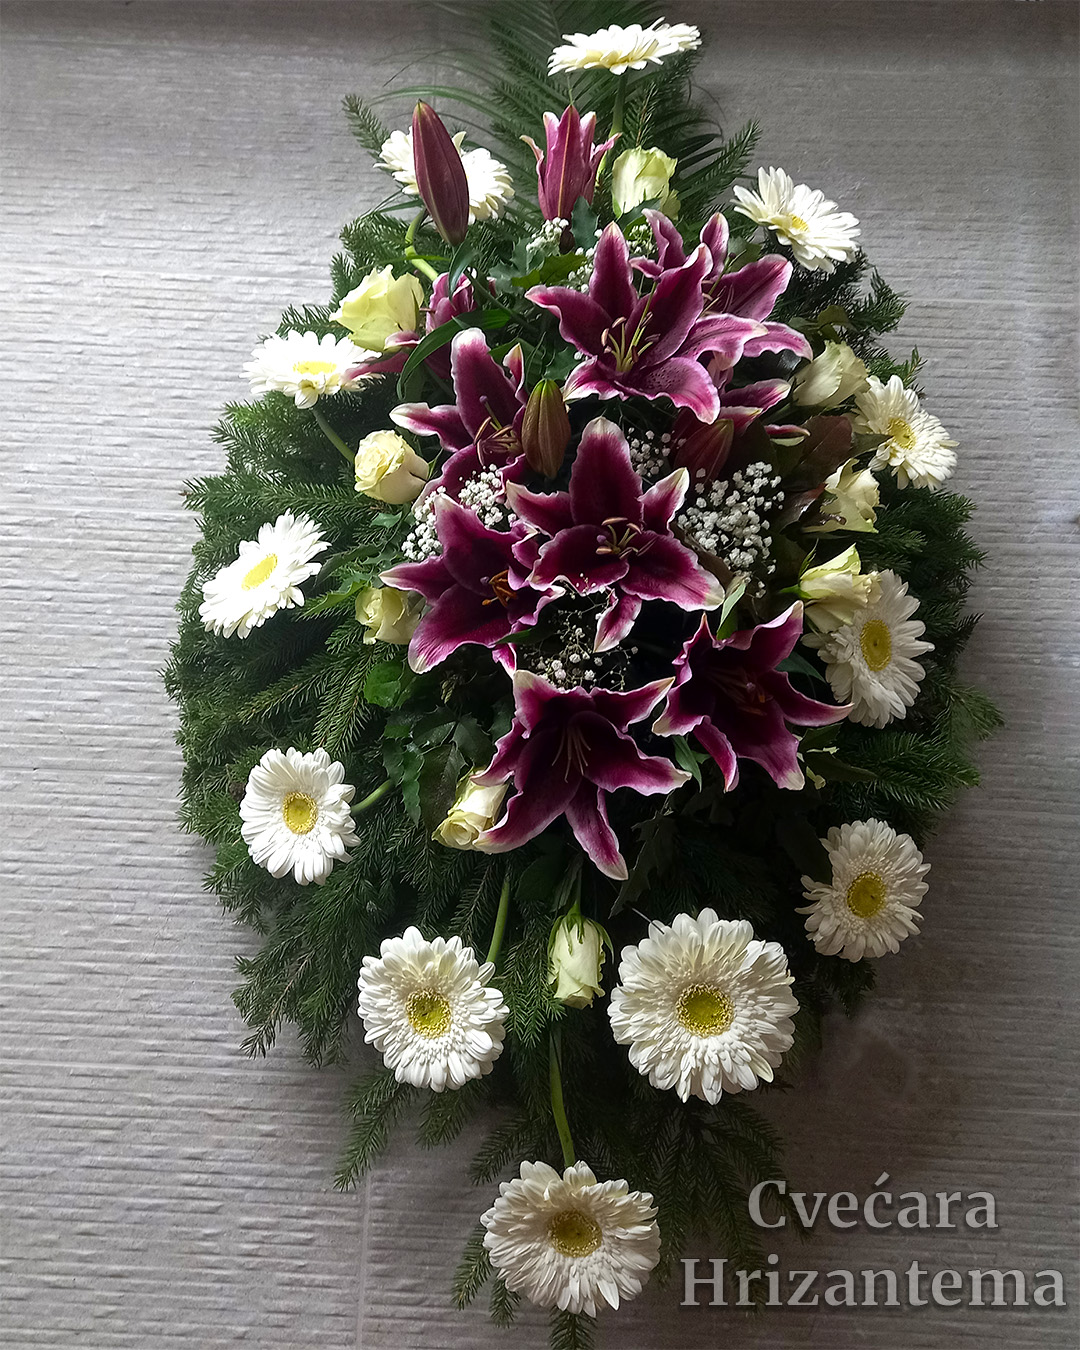 Prirodni venac orijental ljiljan ljubicasti bele ruze beli gerber venac za sahranu cvecara orlovaca